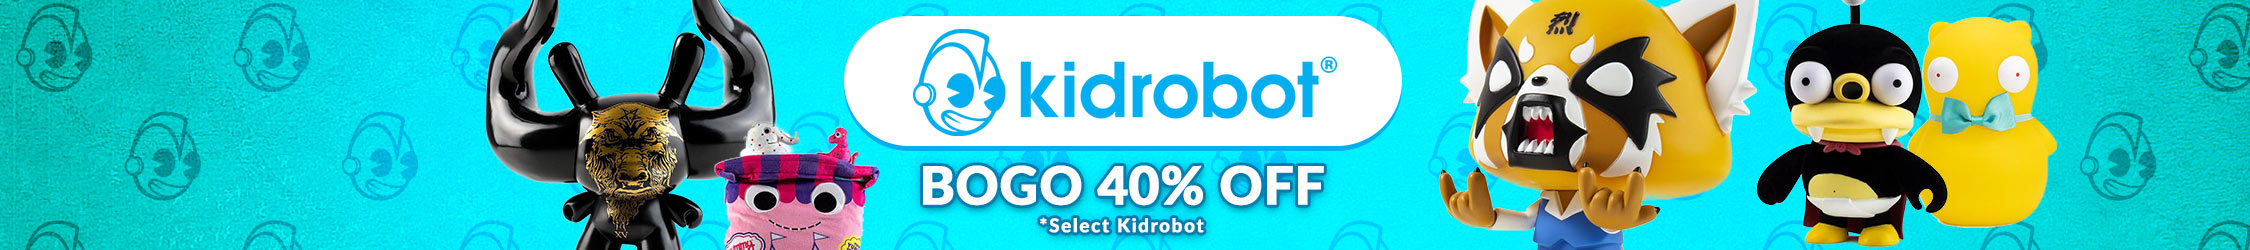 Kidrobot Buy One Get One 40% Off